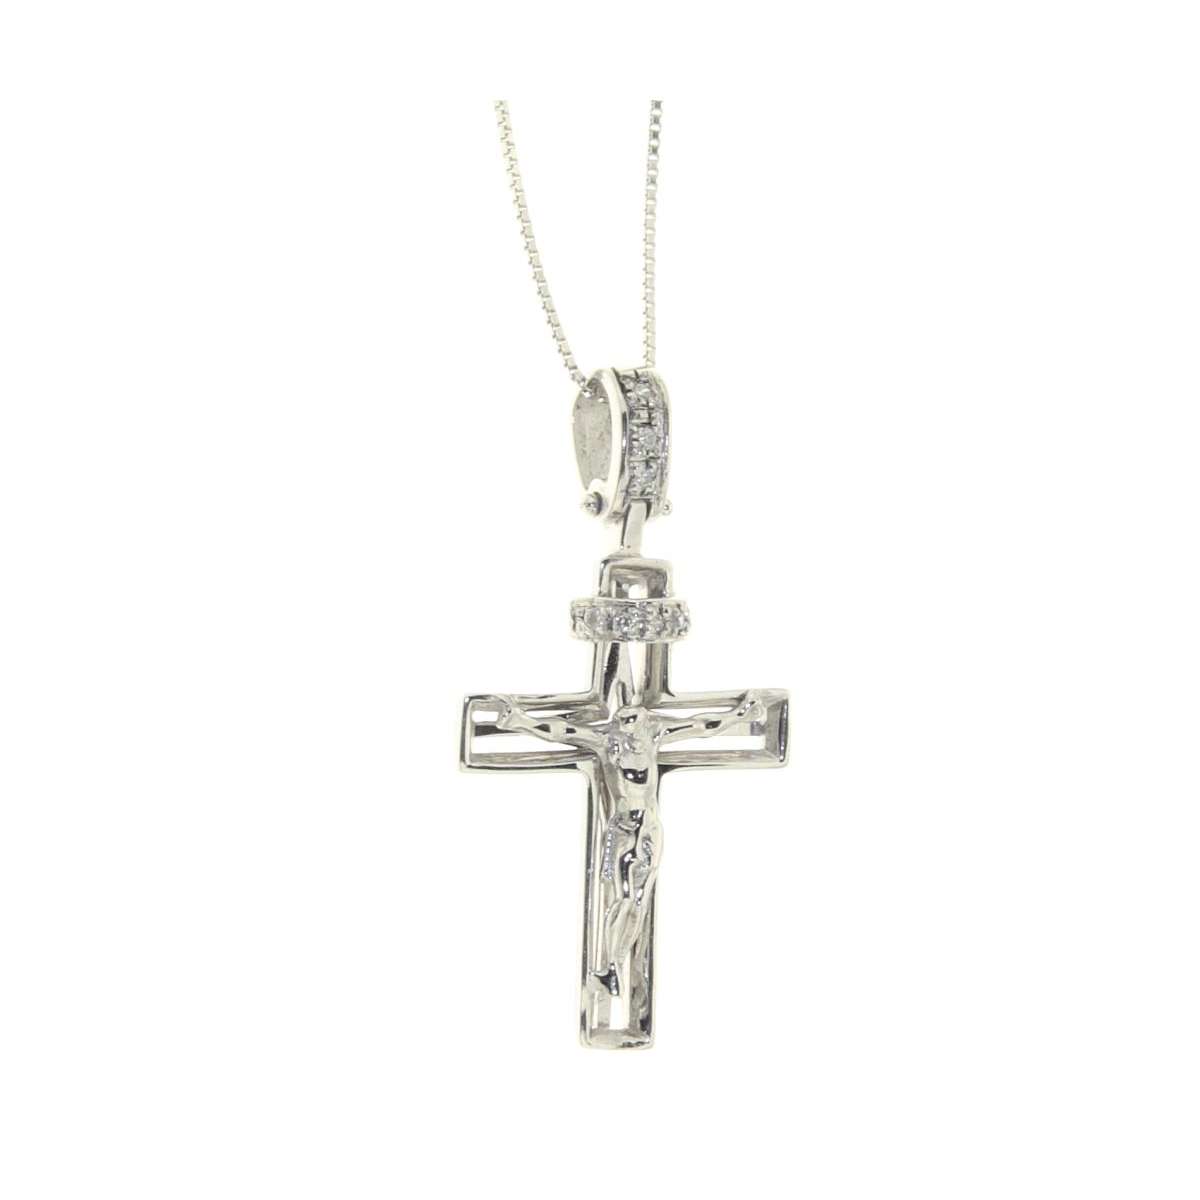 White gold crucifix with Jesus necklace for men 0.03 carats diamonds H-VVS1